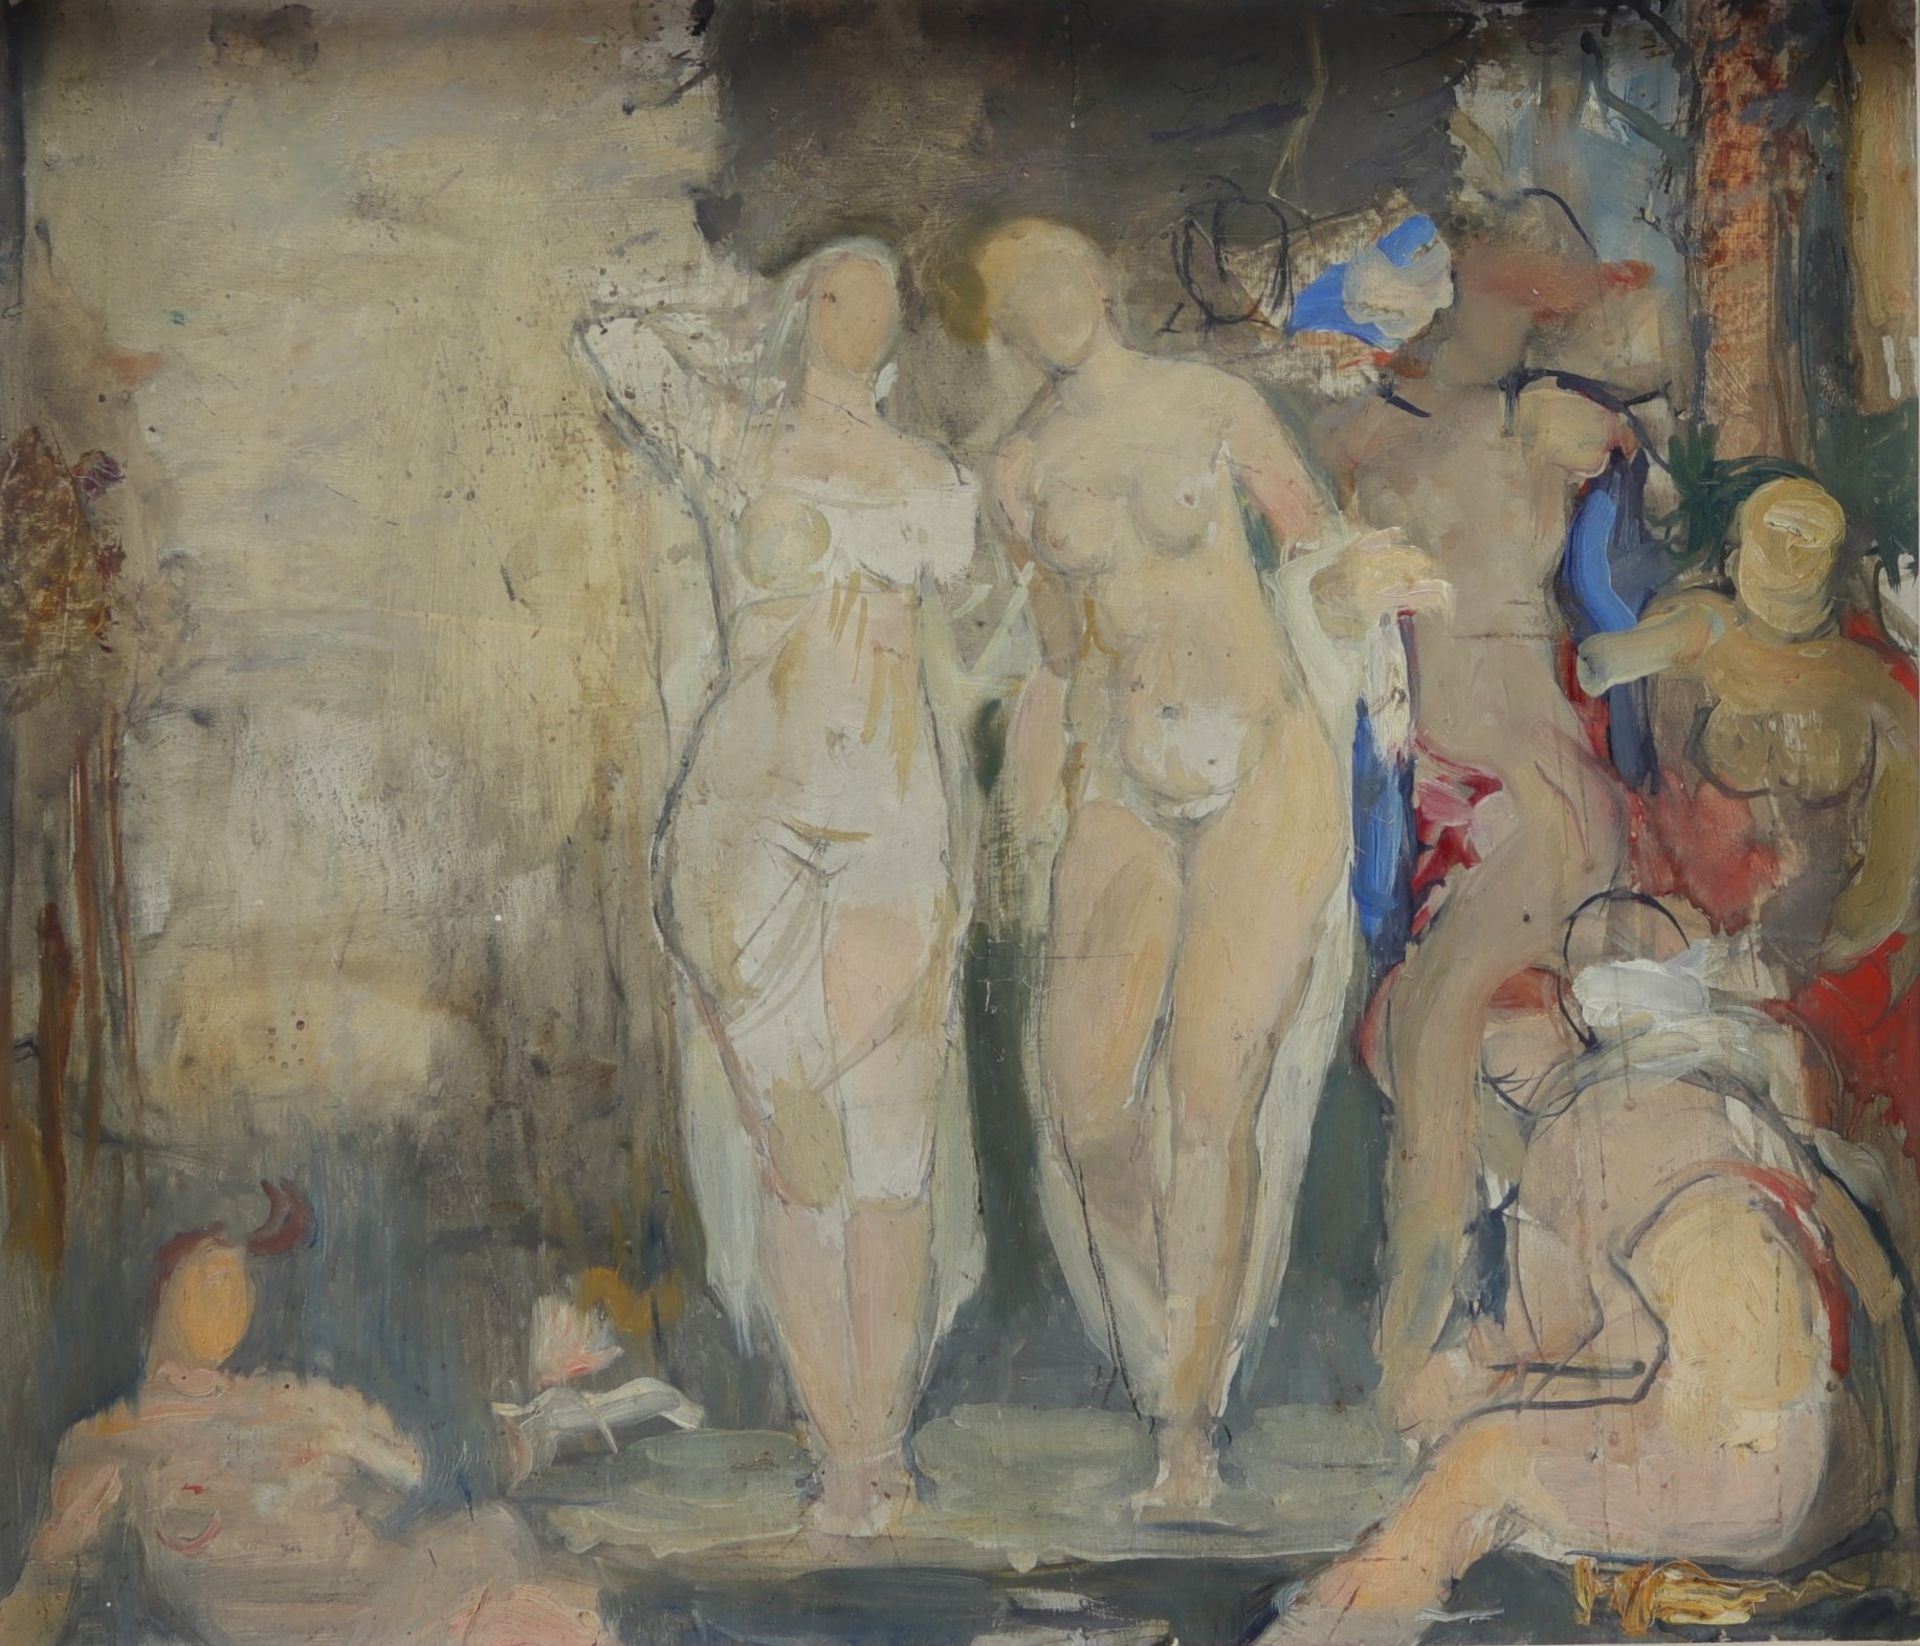 Paul ARTOT (1875-1958) "Young Women at the Turkish Bath" Oil on panel.